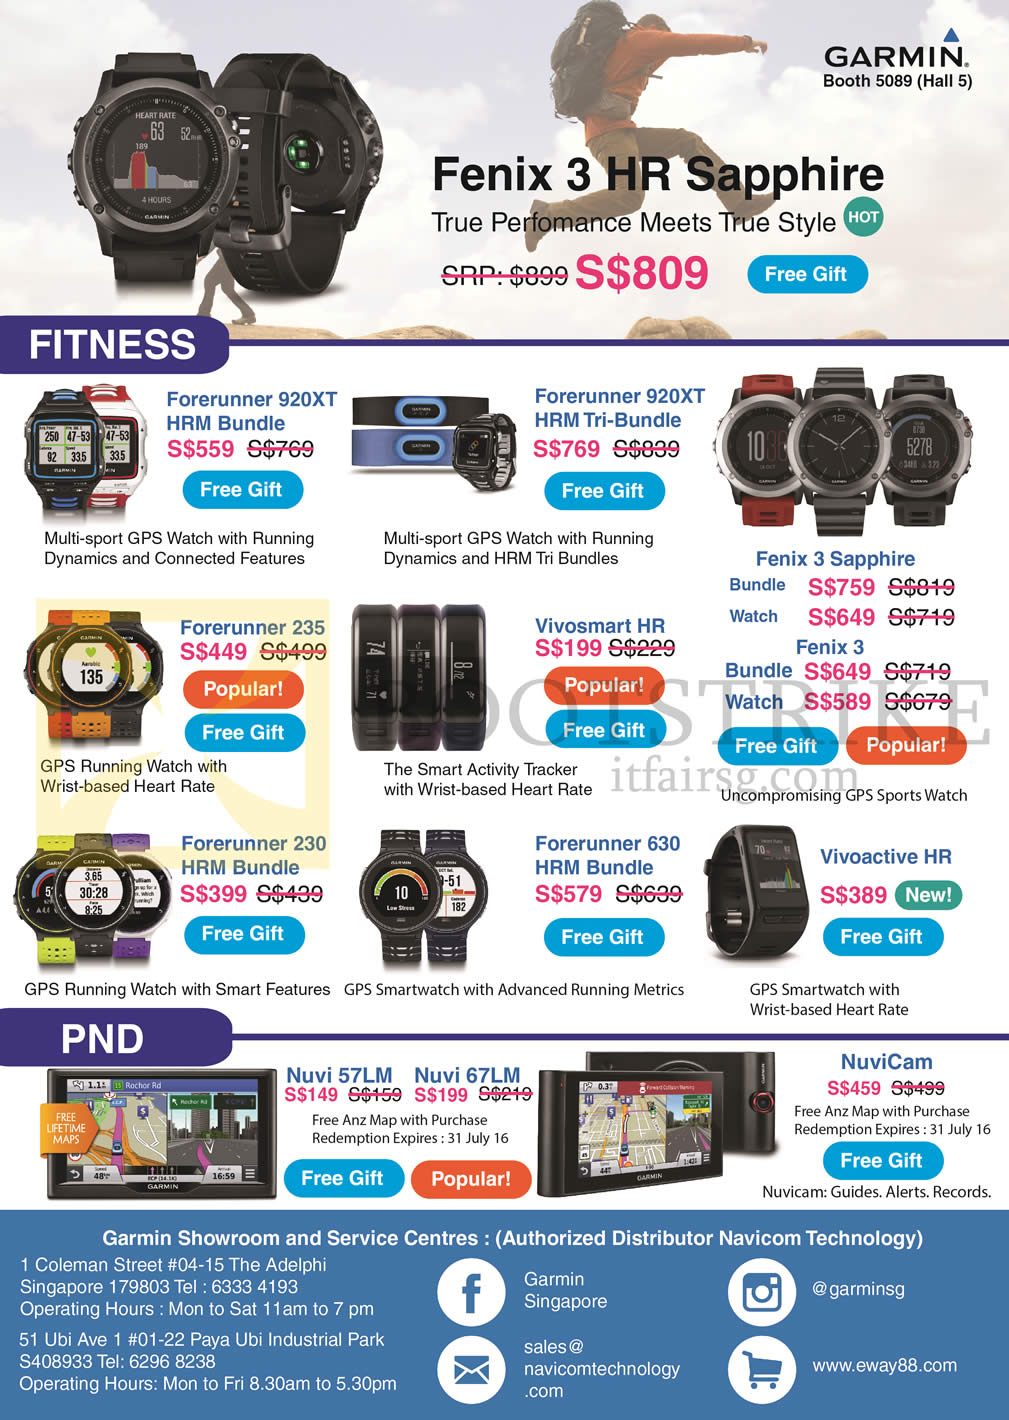 PC SHOW 2016 price list image brochure of Garmin GPS Fitness Watches, PND, Forerunner 920XT, 235, 230, 630, Vivosmart HR, Fenix 3 Sapphire, Vivoactive HR, Navigators Nuvi 57LM, 67LM, NuviCam